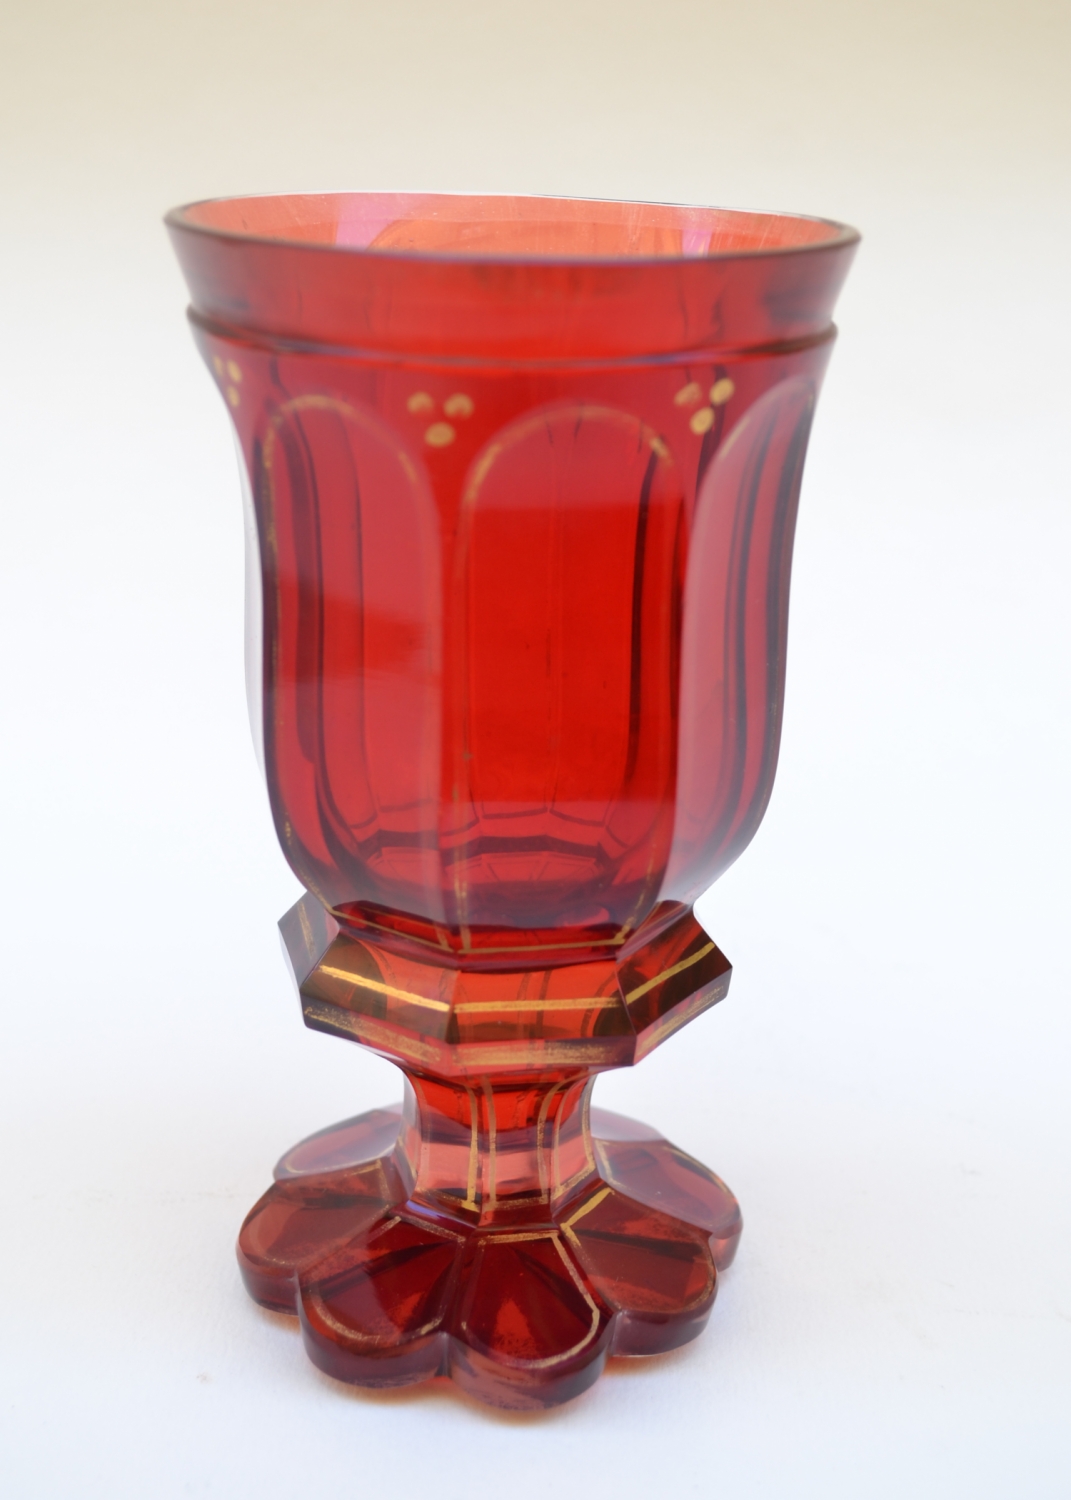 Sklenka - pohár z rubínového skla